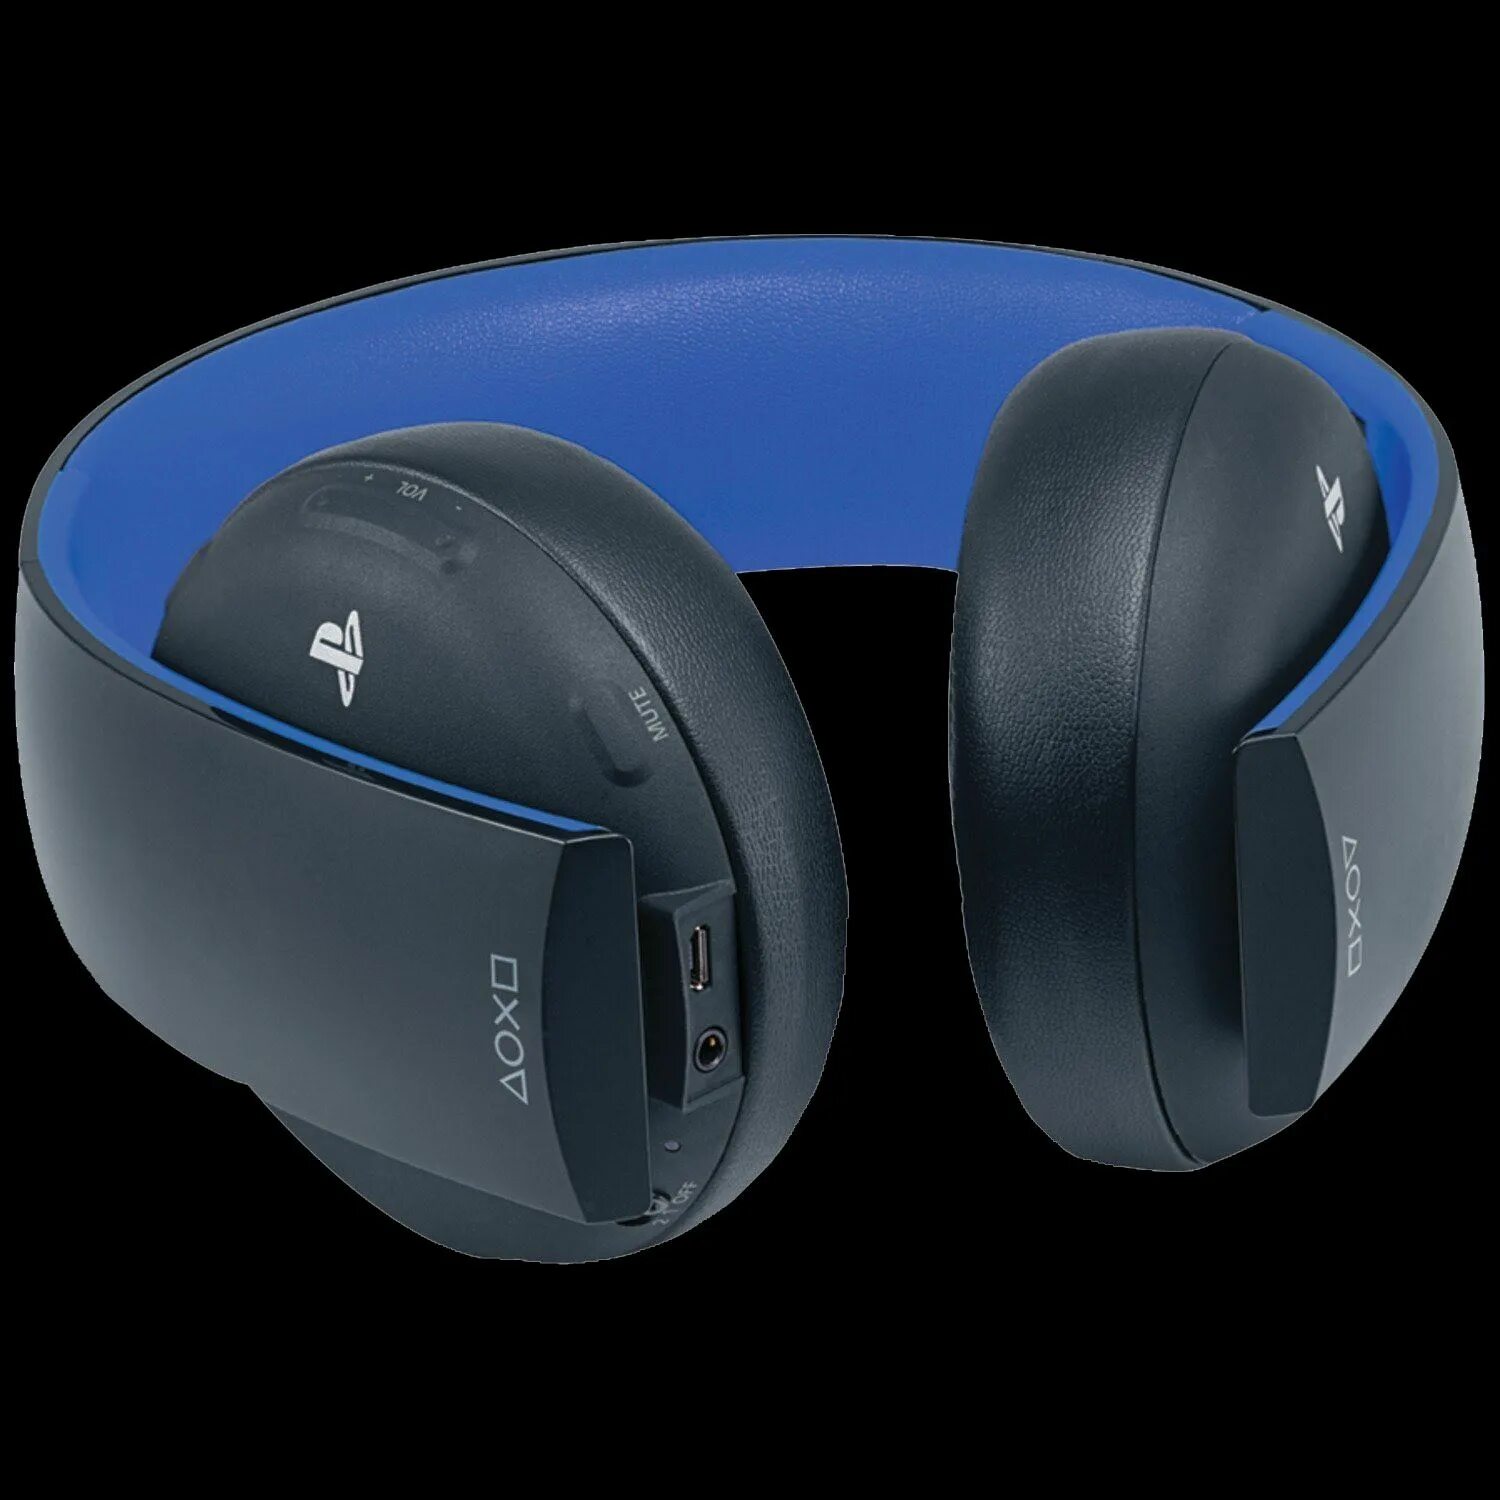 Sony Wireless stereo Headset 2.0. Wireless stereo Headset 2.0 комплектация. Wireless stereo Headset n1152. PLAYSTATION Wireless stereo Headset.